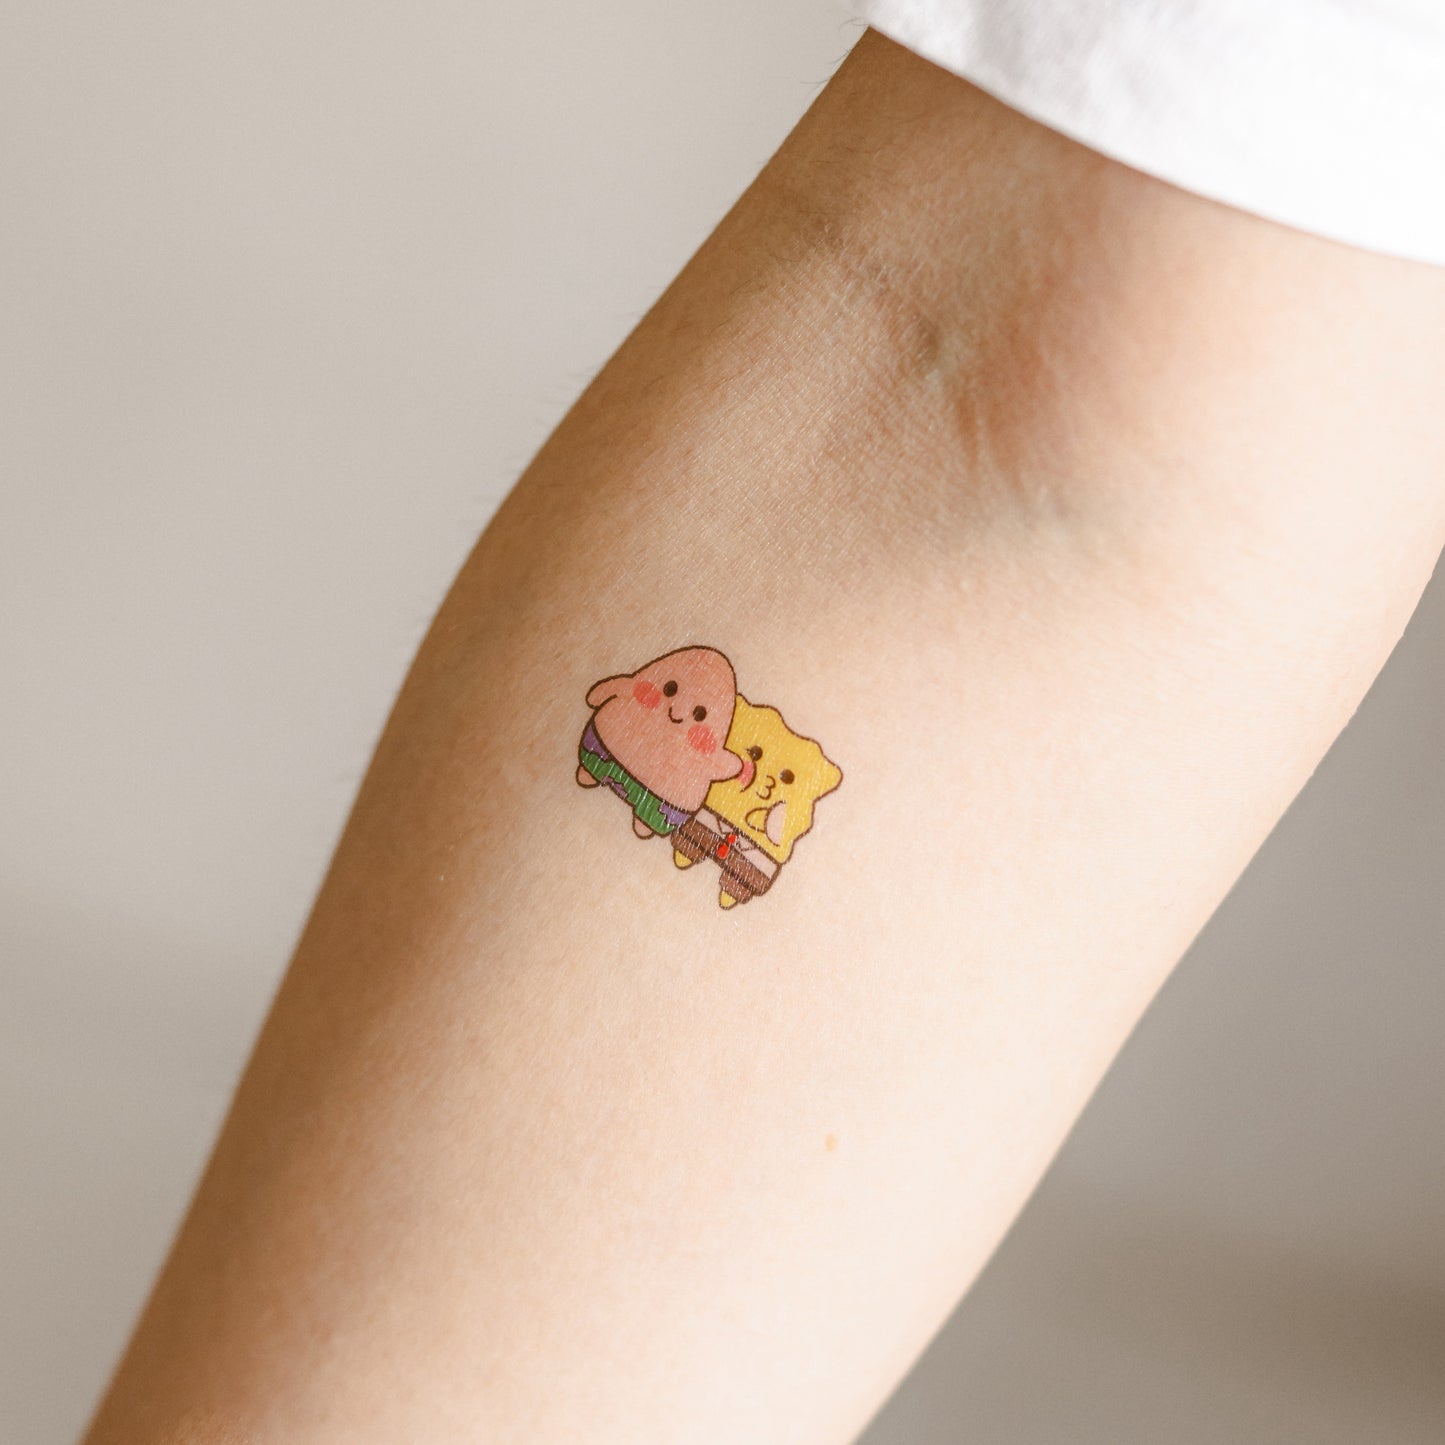 spongebob squarepants & patrick star duo - temporary tattoo sticker